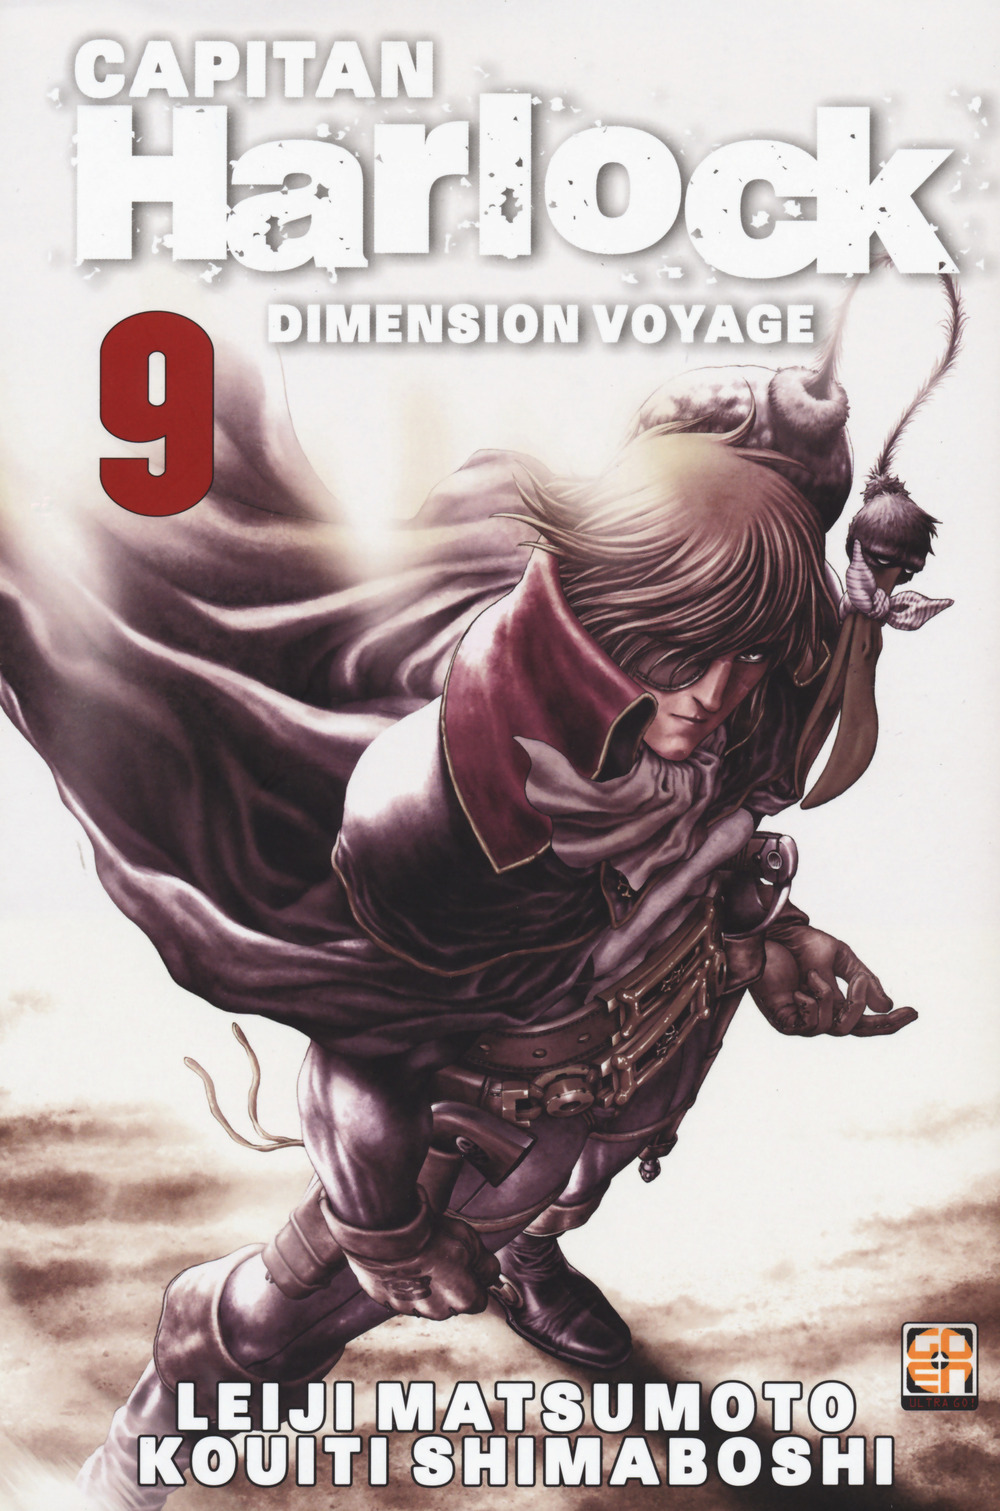 Dimension voyage. Capitan Harlock. Vol. 9